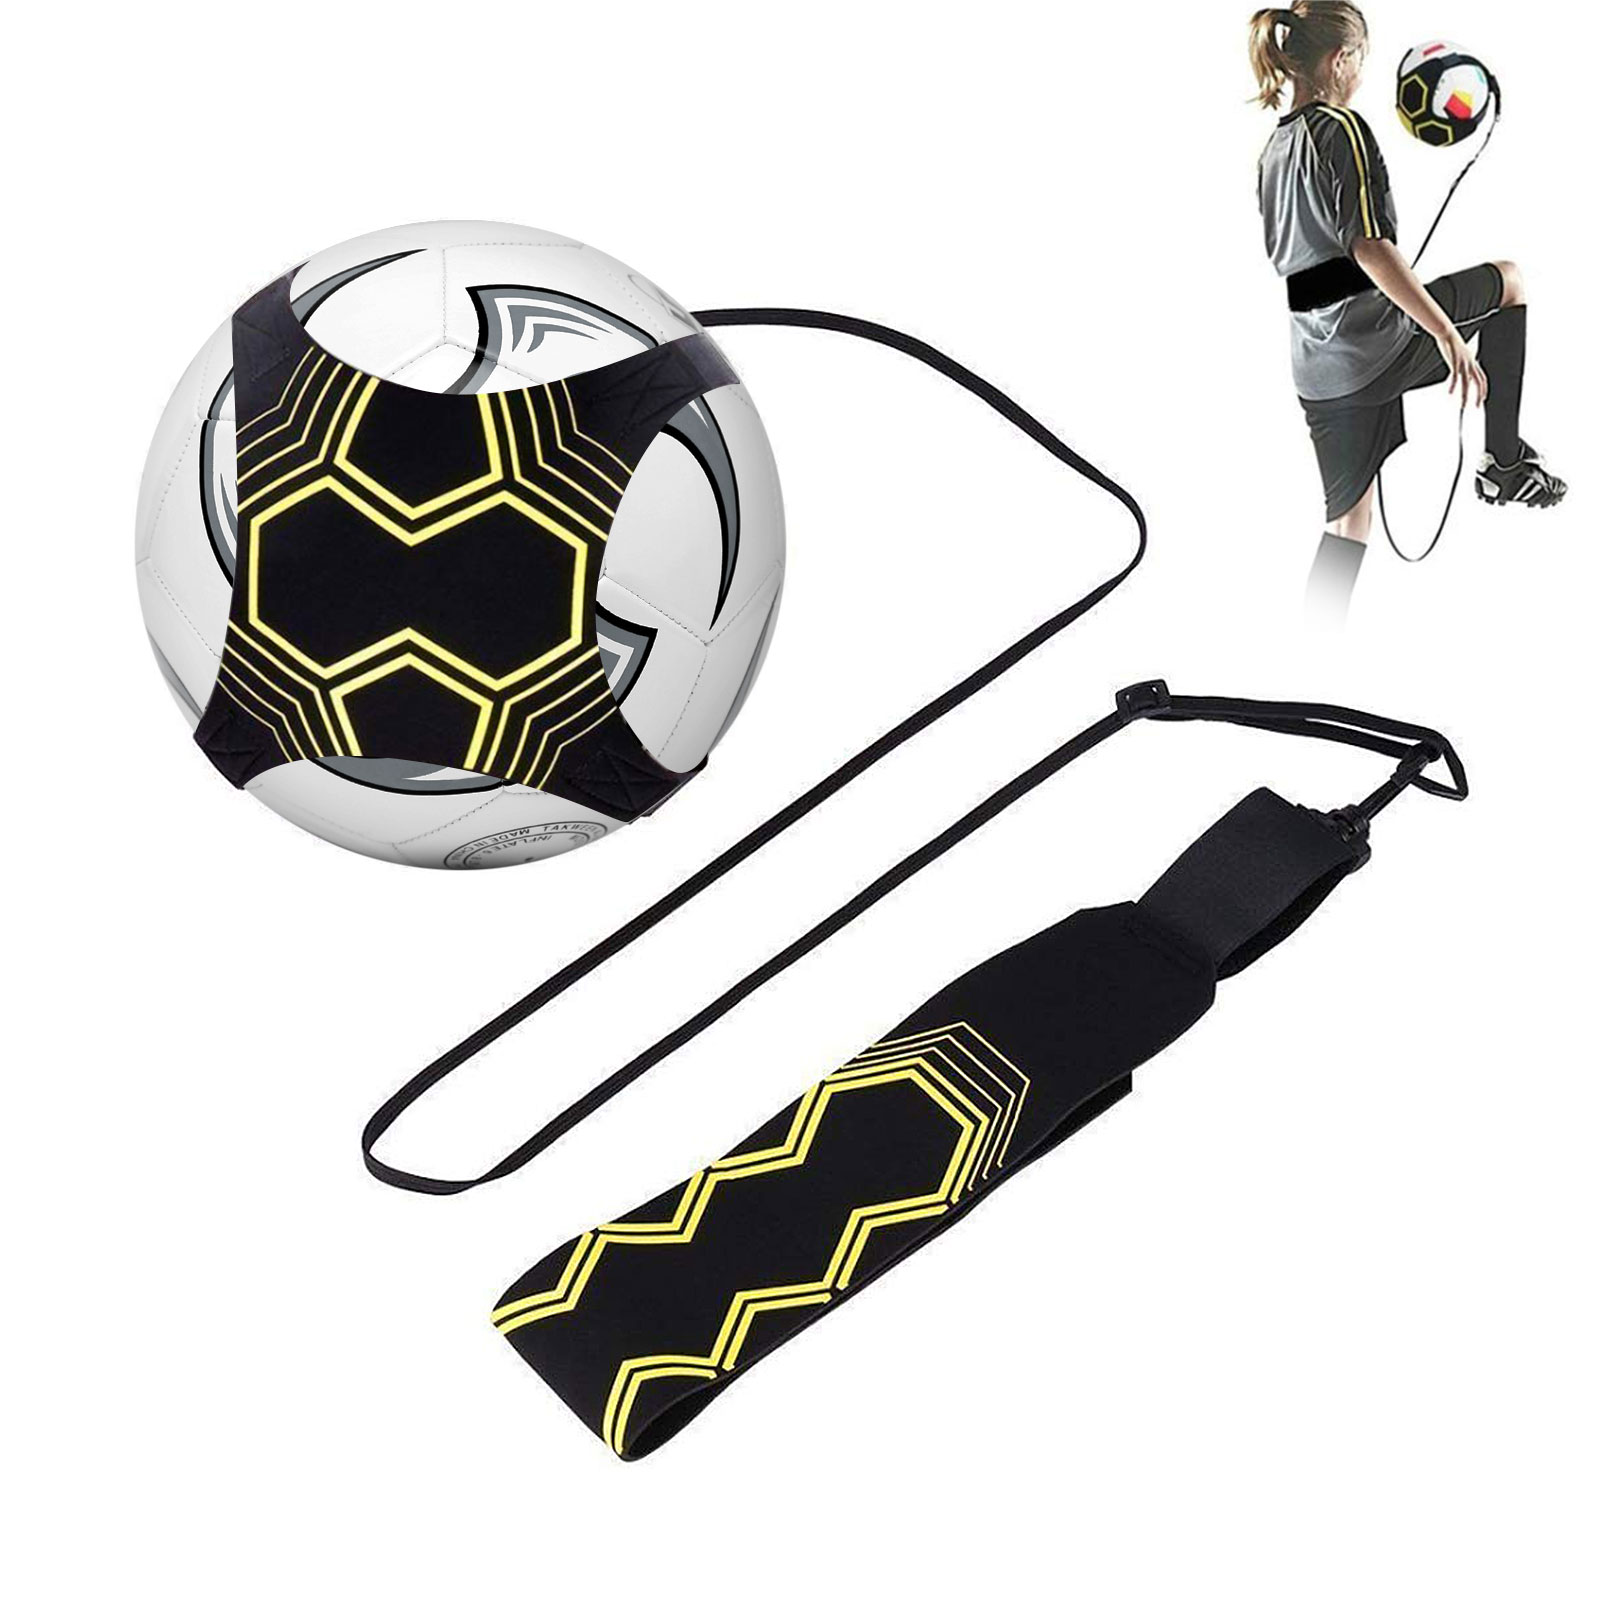 Adjustable Football Kick Trainer Soccer Ball Train Aid Equipment ...